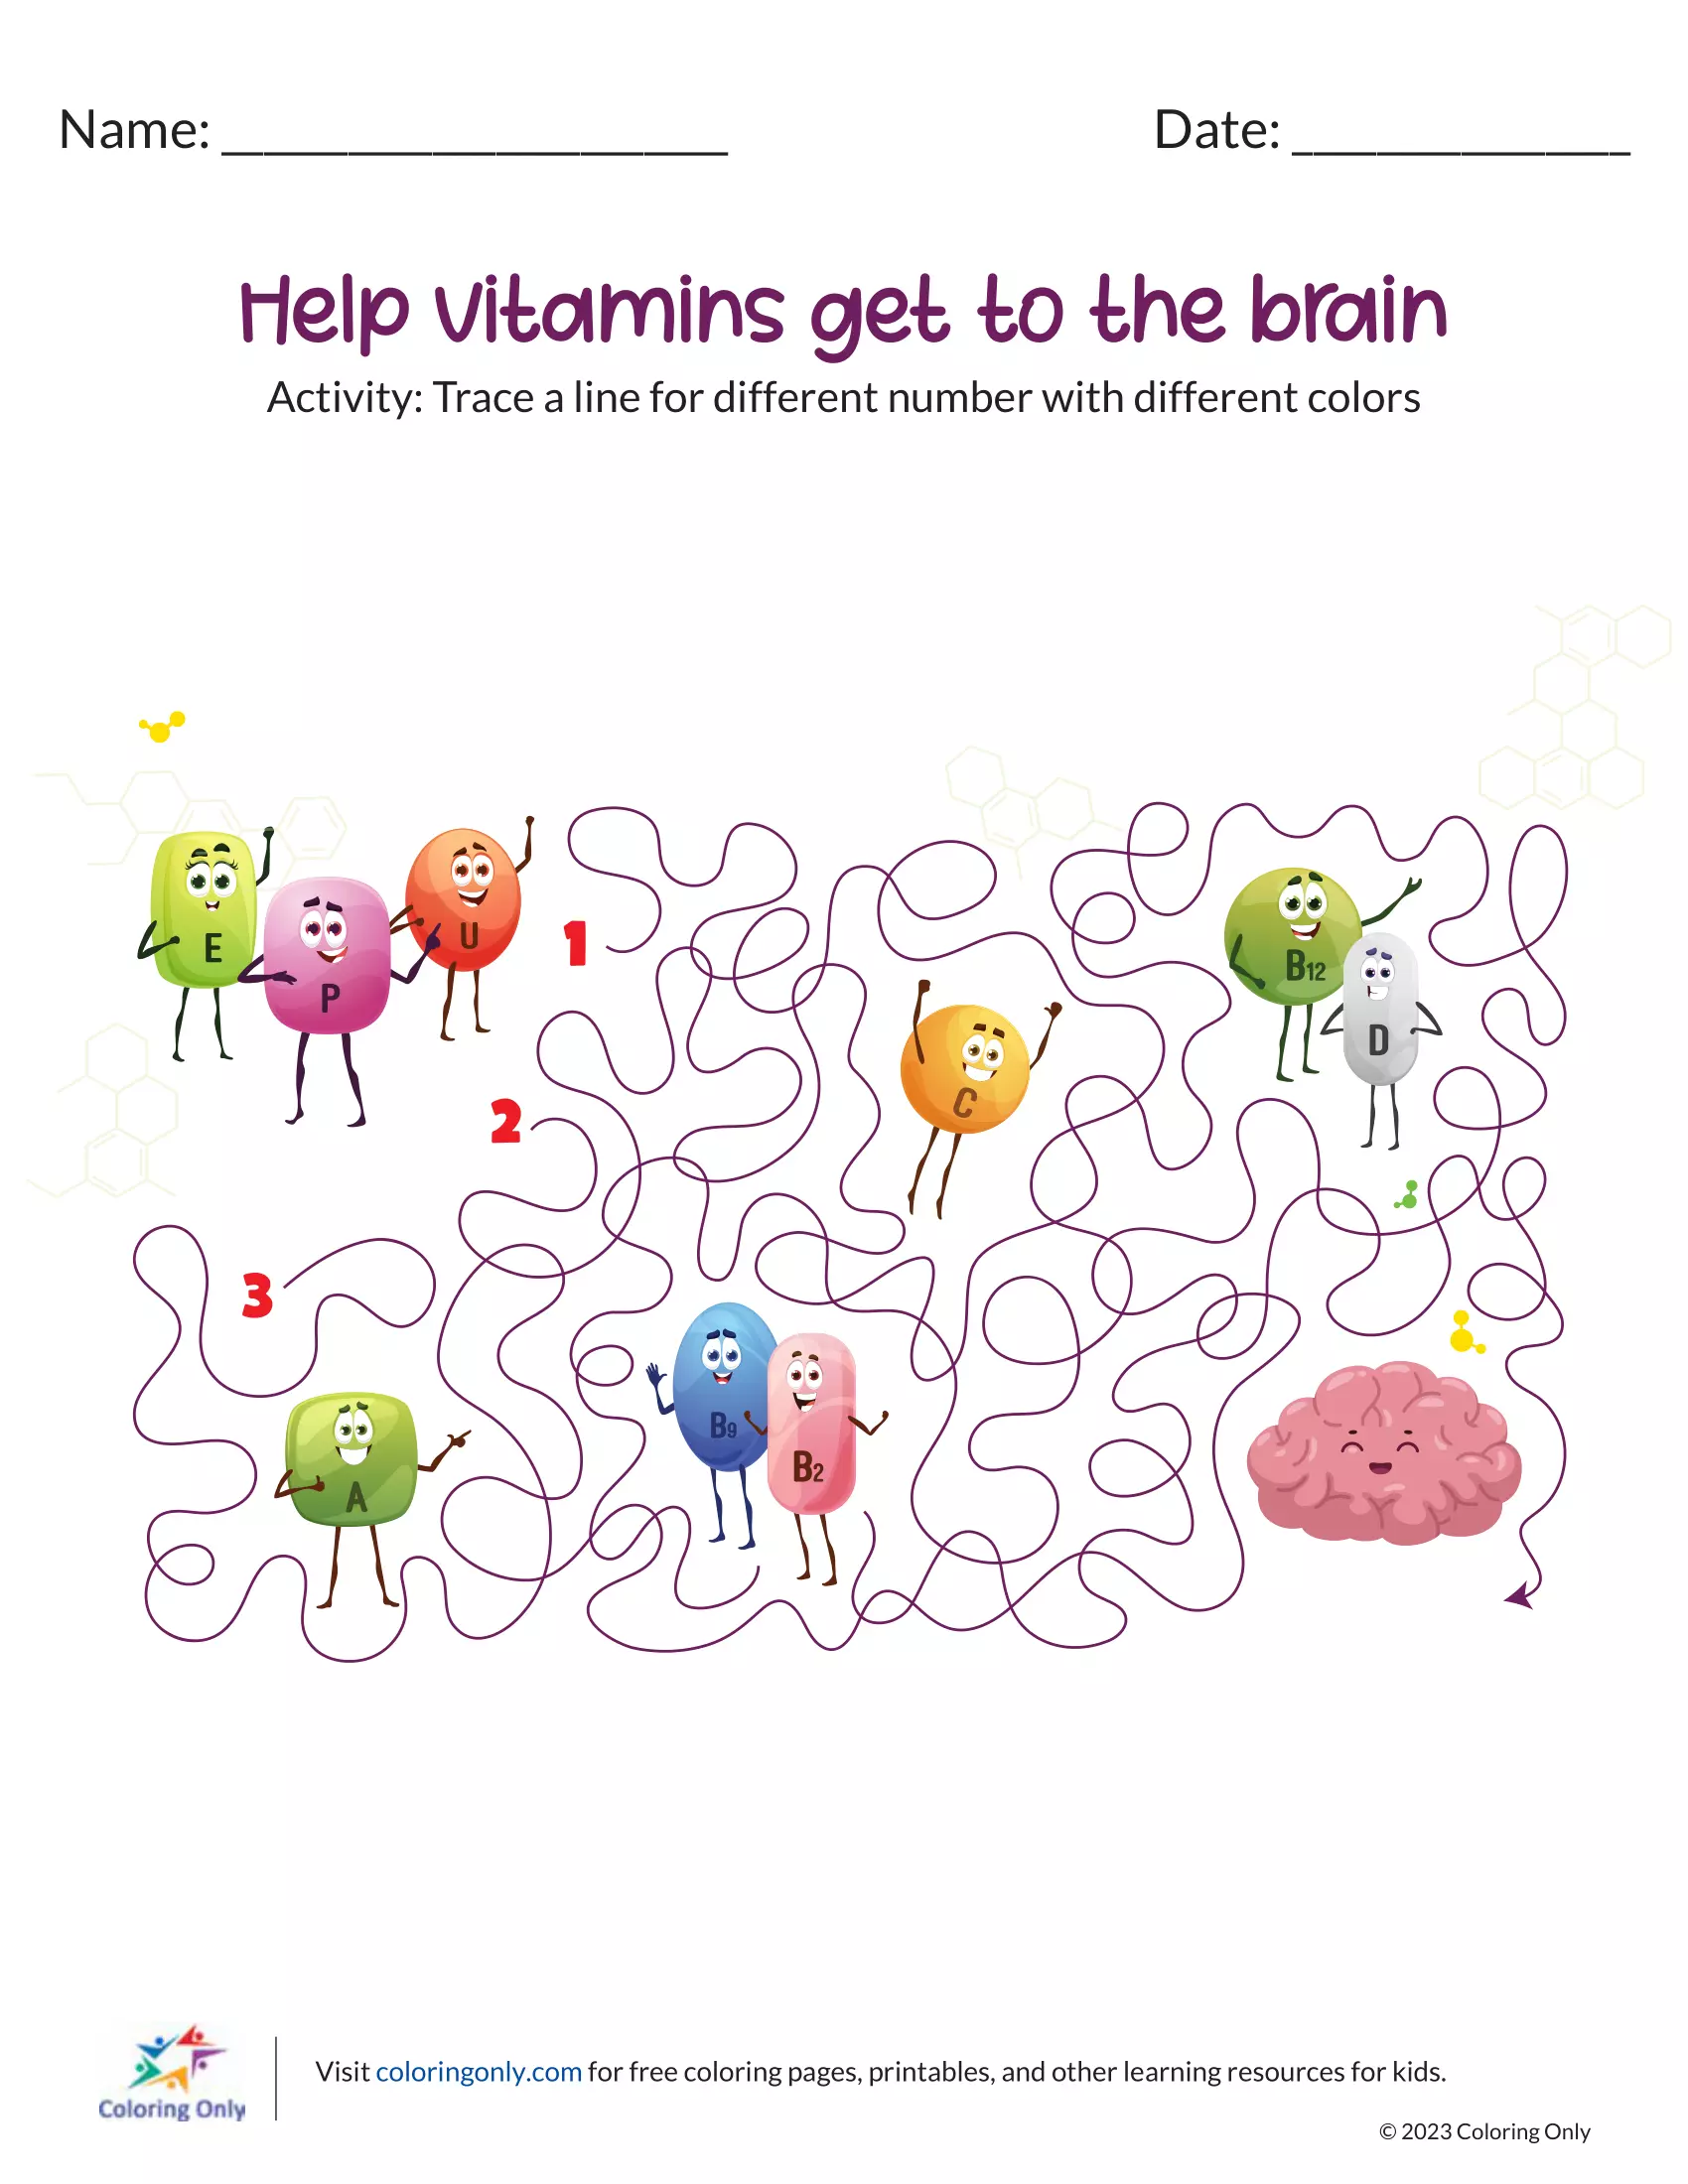 Help Vitamins Get to the Brain